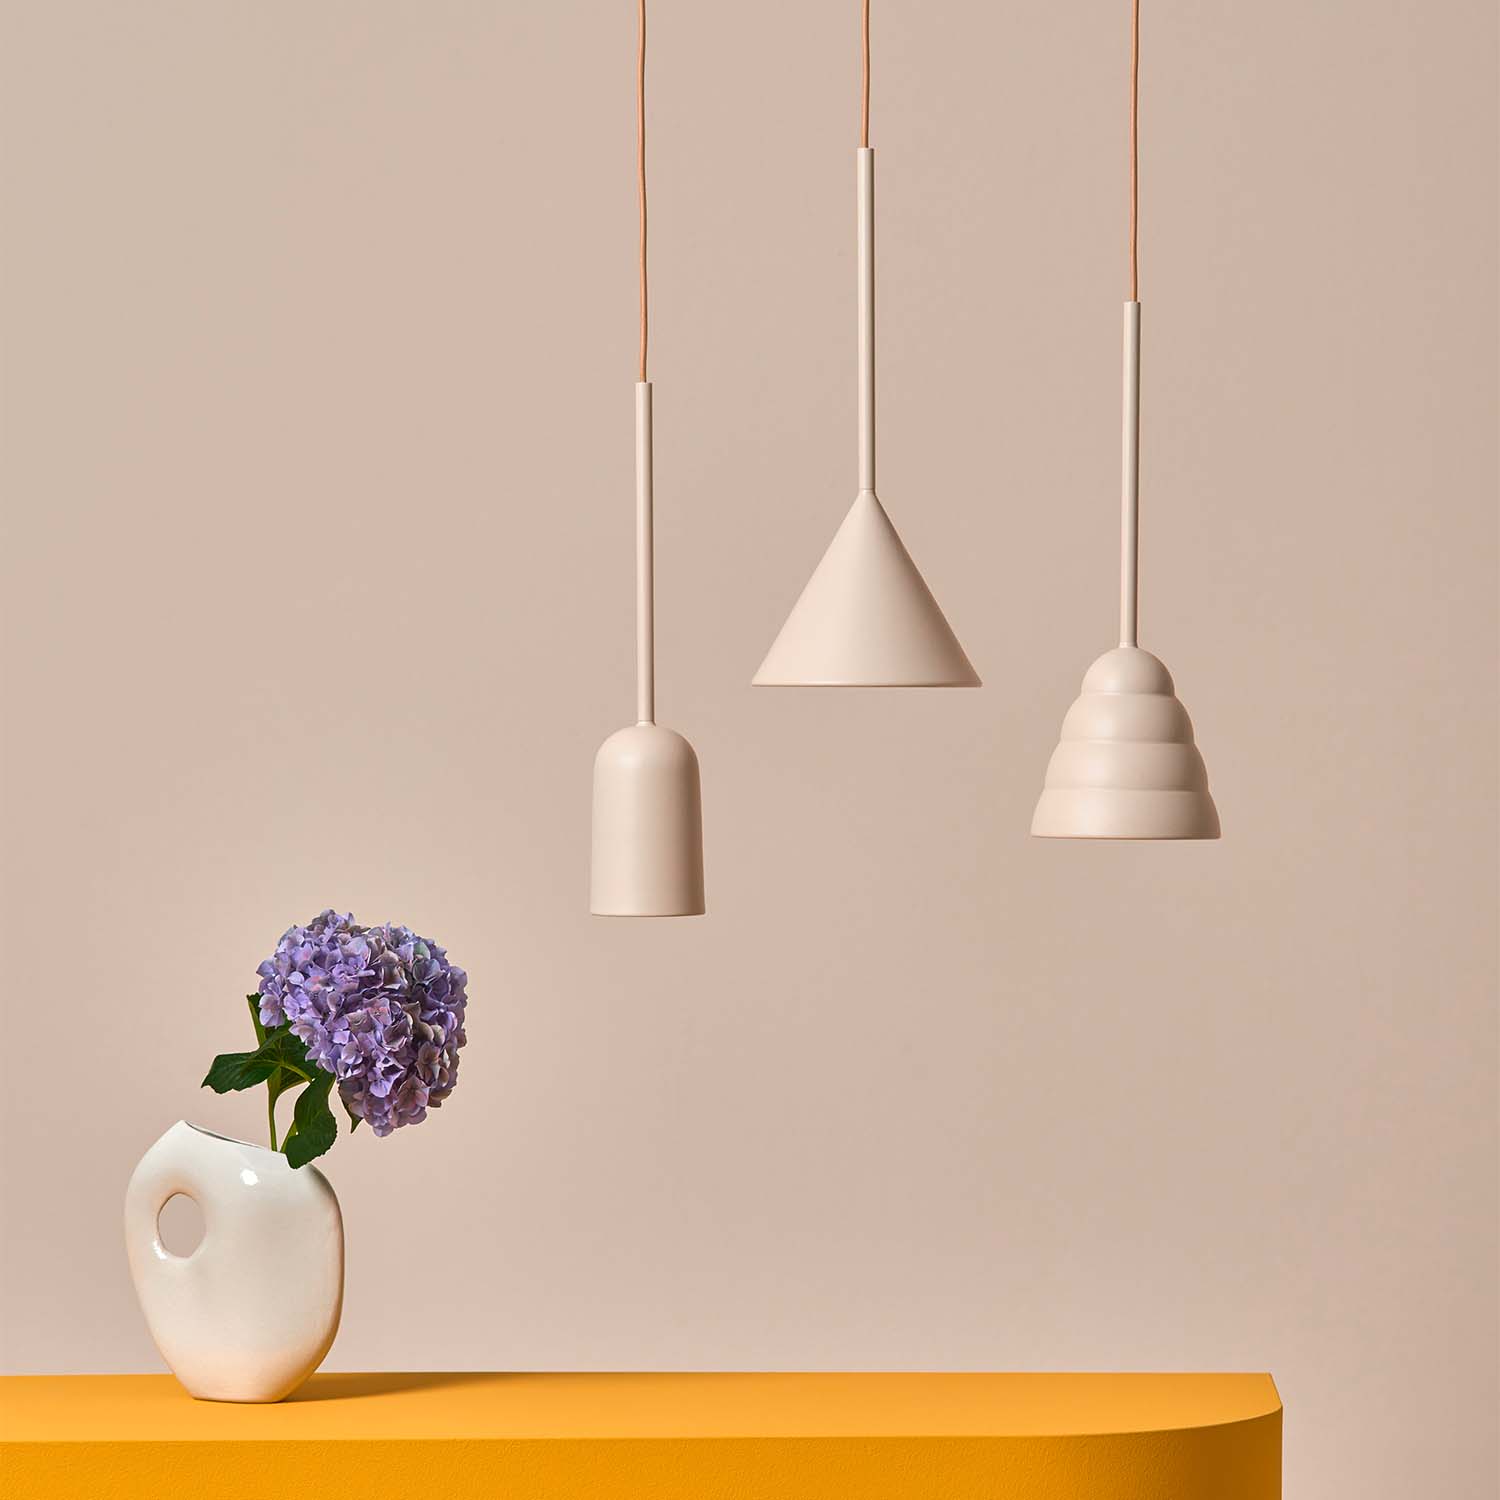 FIGURA ARC - Colorful minimalist designer pendant light